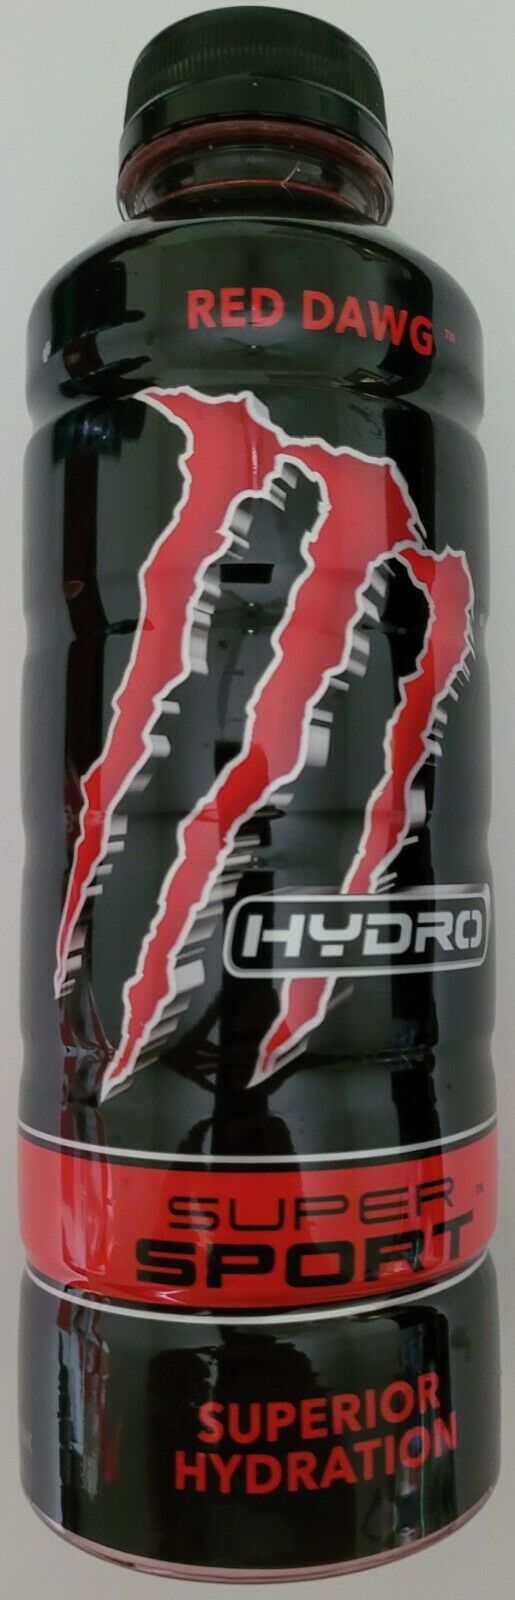 New Monster Hydro Super Sport Red Dawg Drink 20 Fl Oz Full Bottle Free Shipping